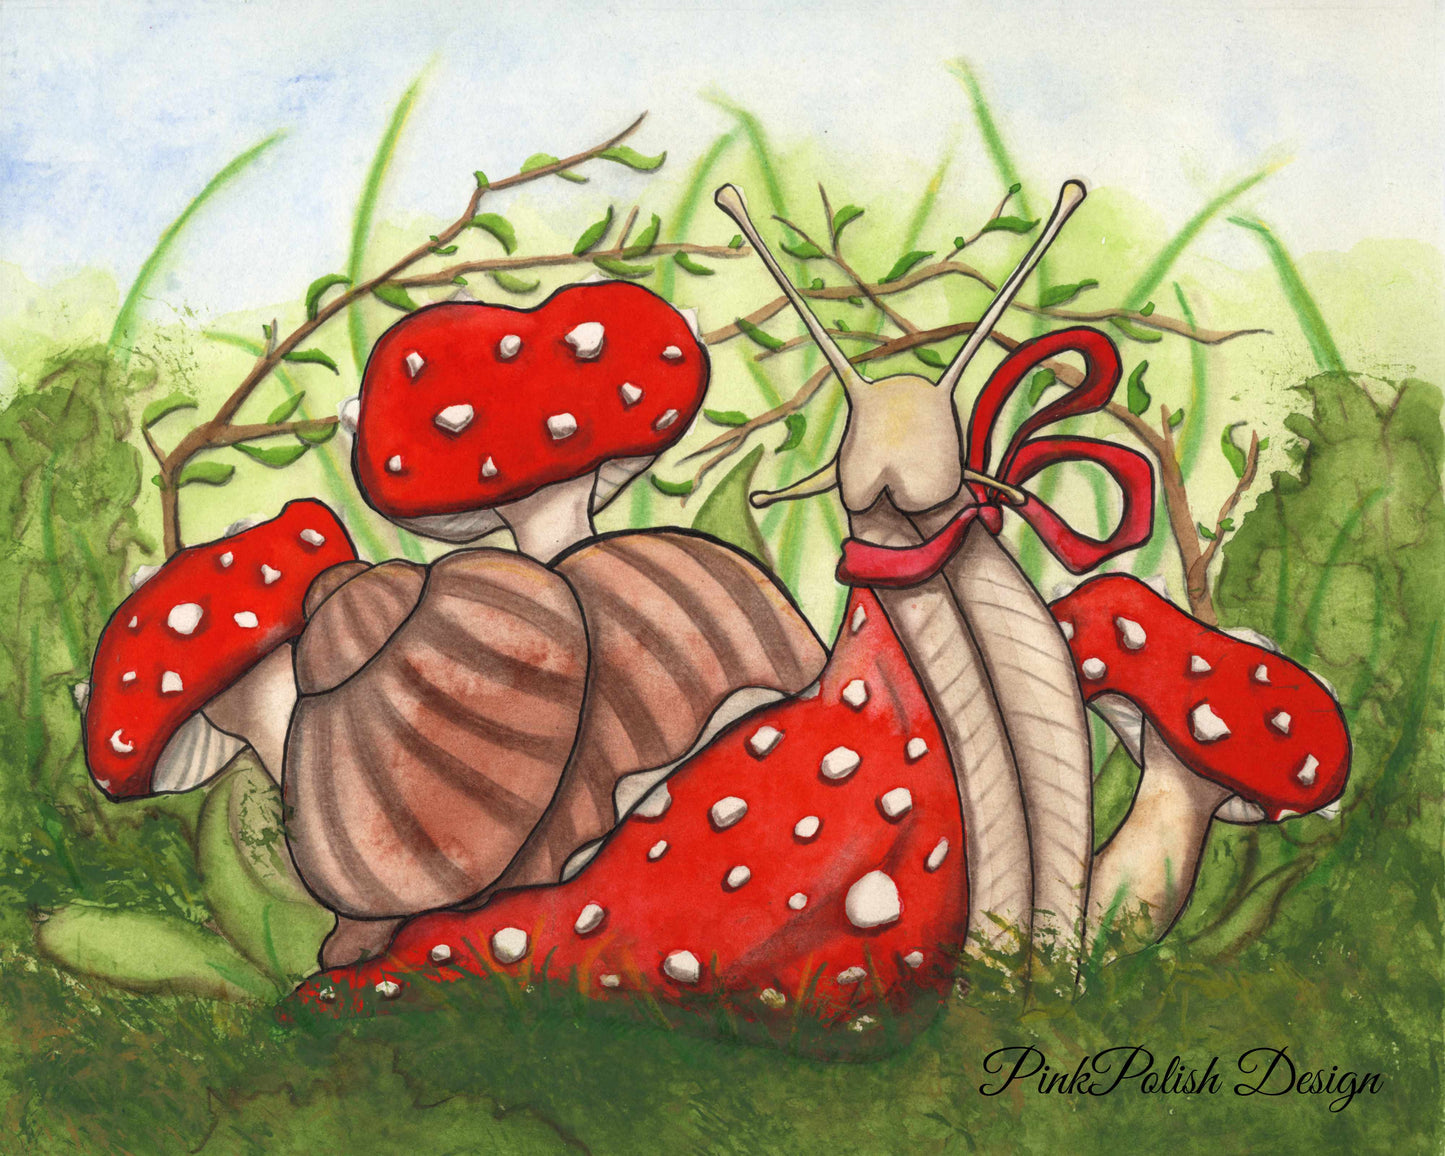 PinkPolish Design Art Prints "Ms. Fantabulous Snail" Watercolor Painting: Art Print